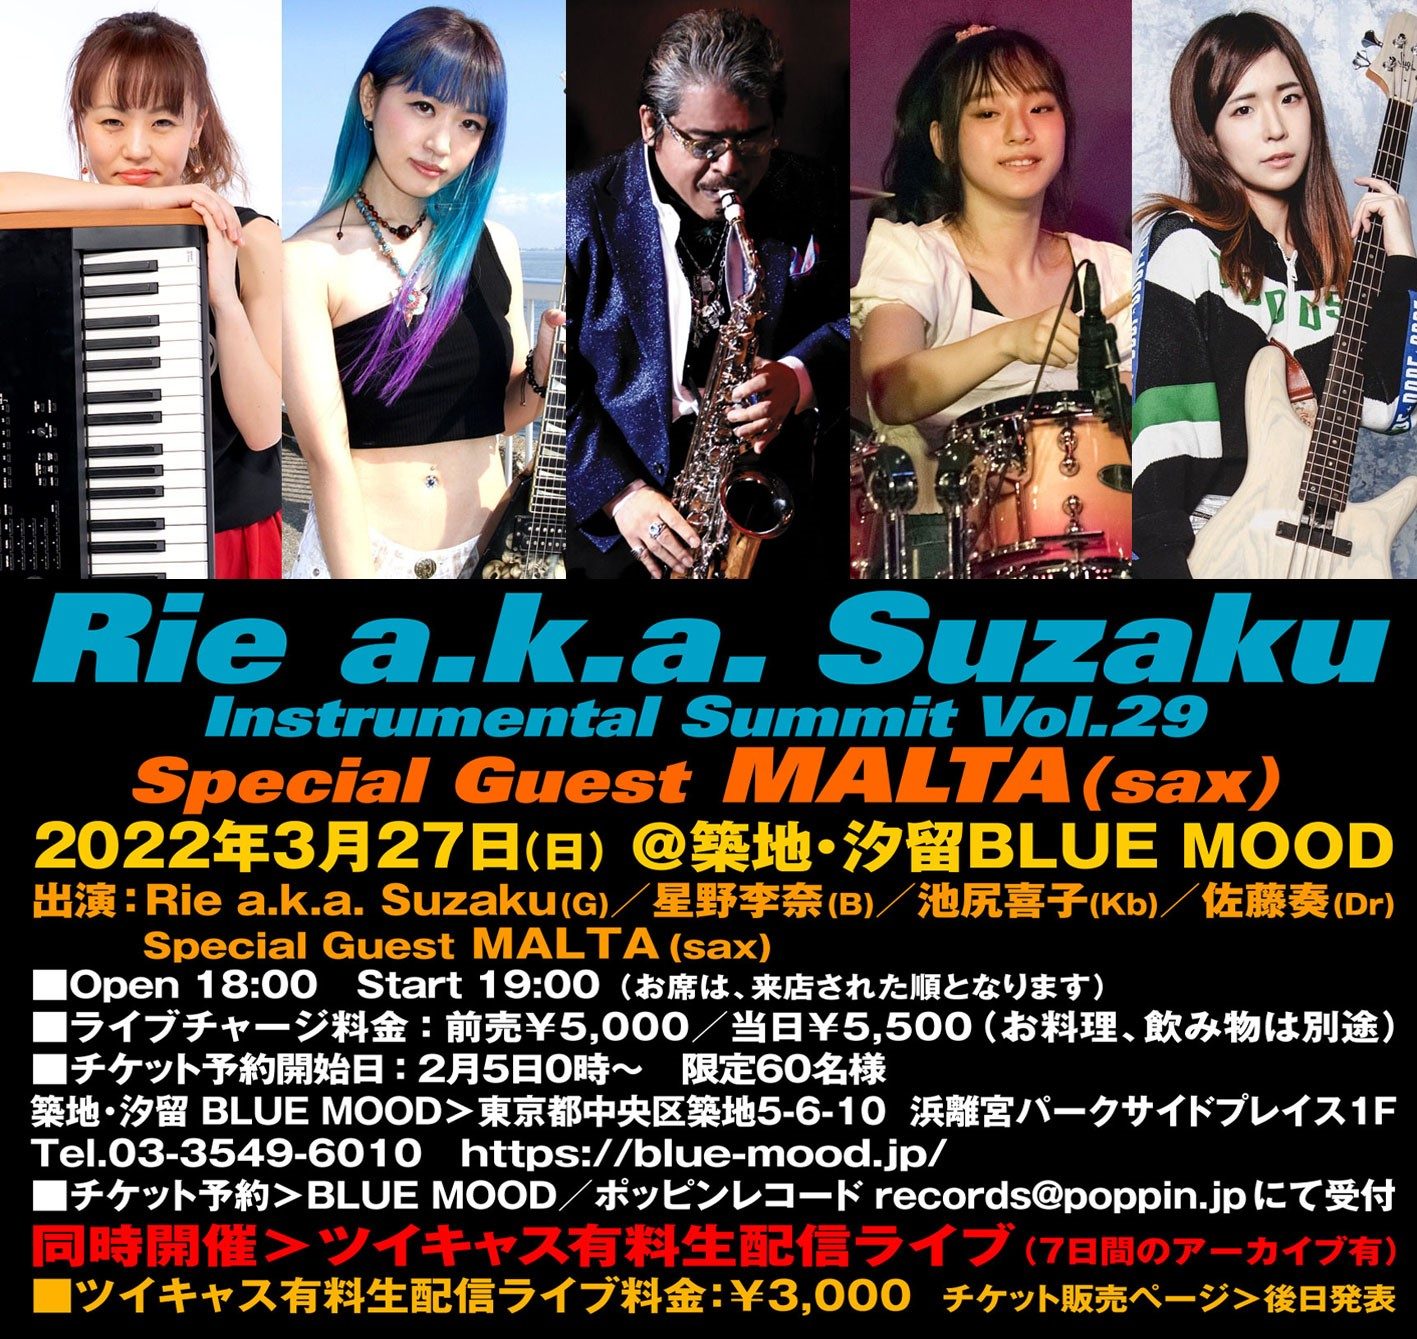 Rie a.k.a. Suzaku Instrumental Summit Vol.29 Special Guest MALTA